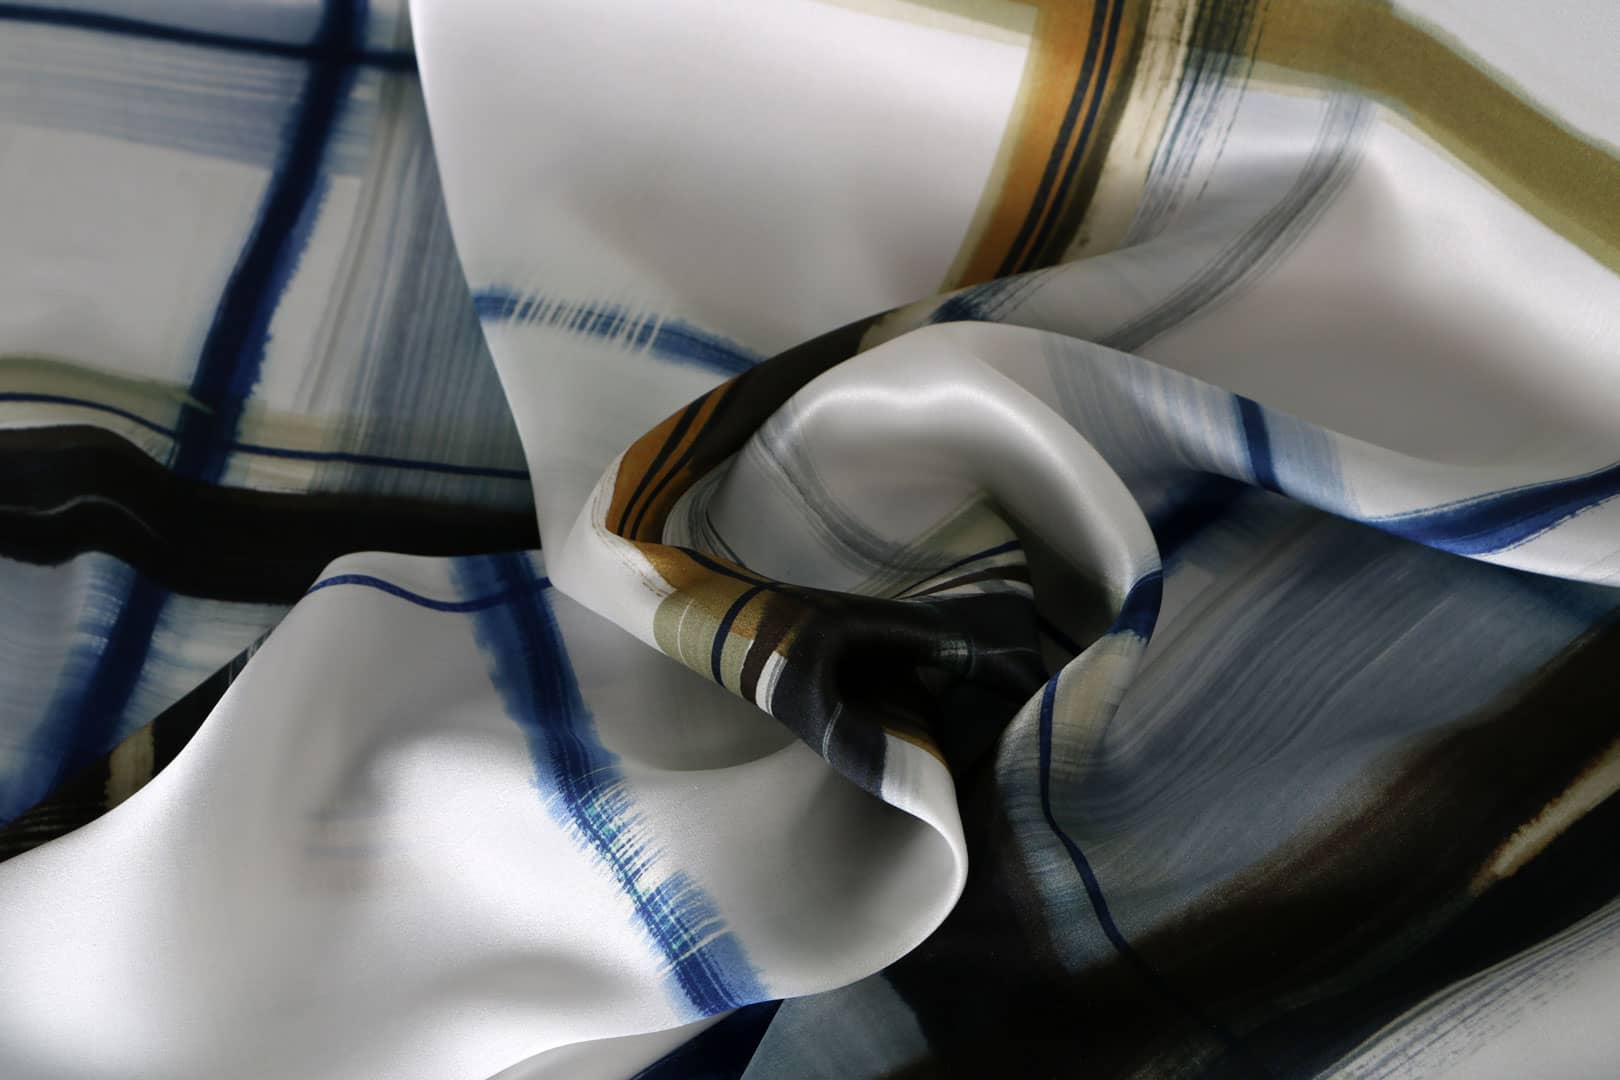 Blue, White Silk Crêpe Satin fabric for dressmaking